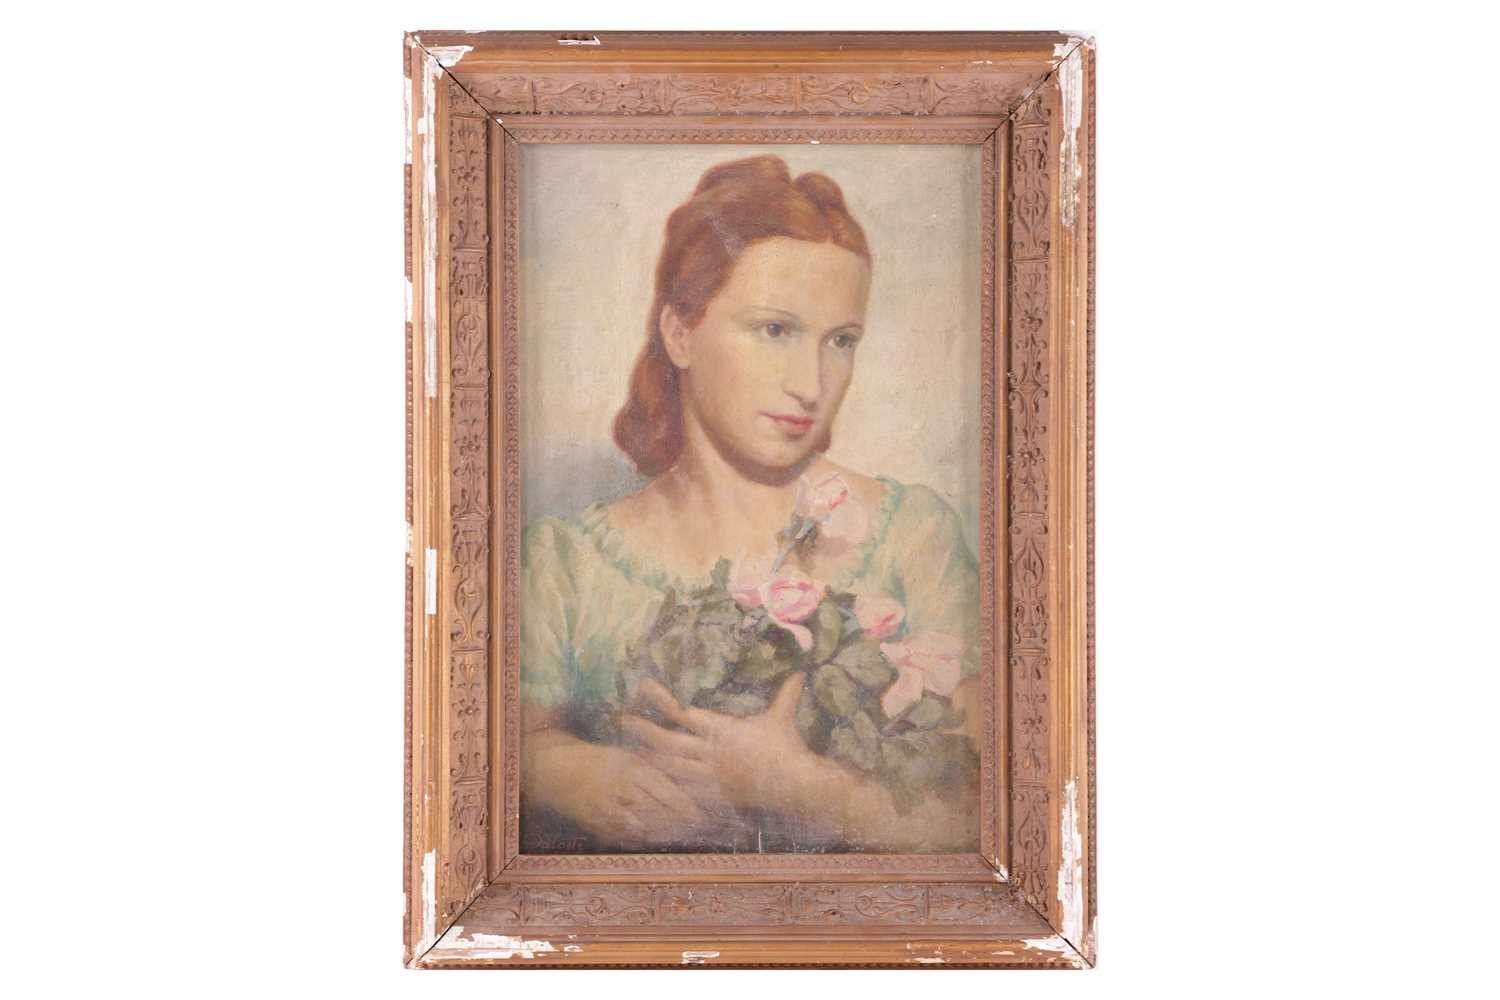 L. Palotty (Italian, 20th century), Portrait of a lady holding roses, signed 'L. Palotty Forli' (low